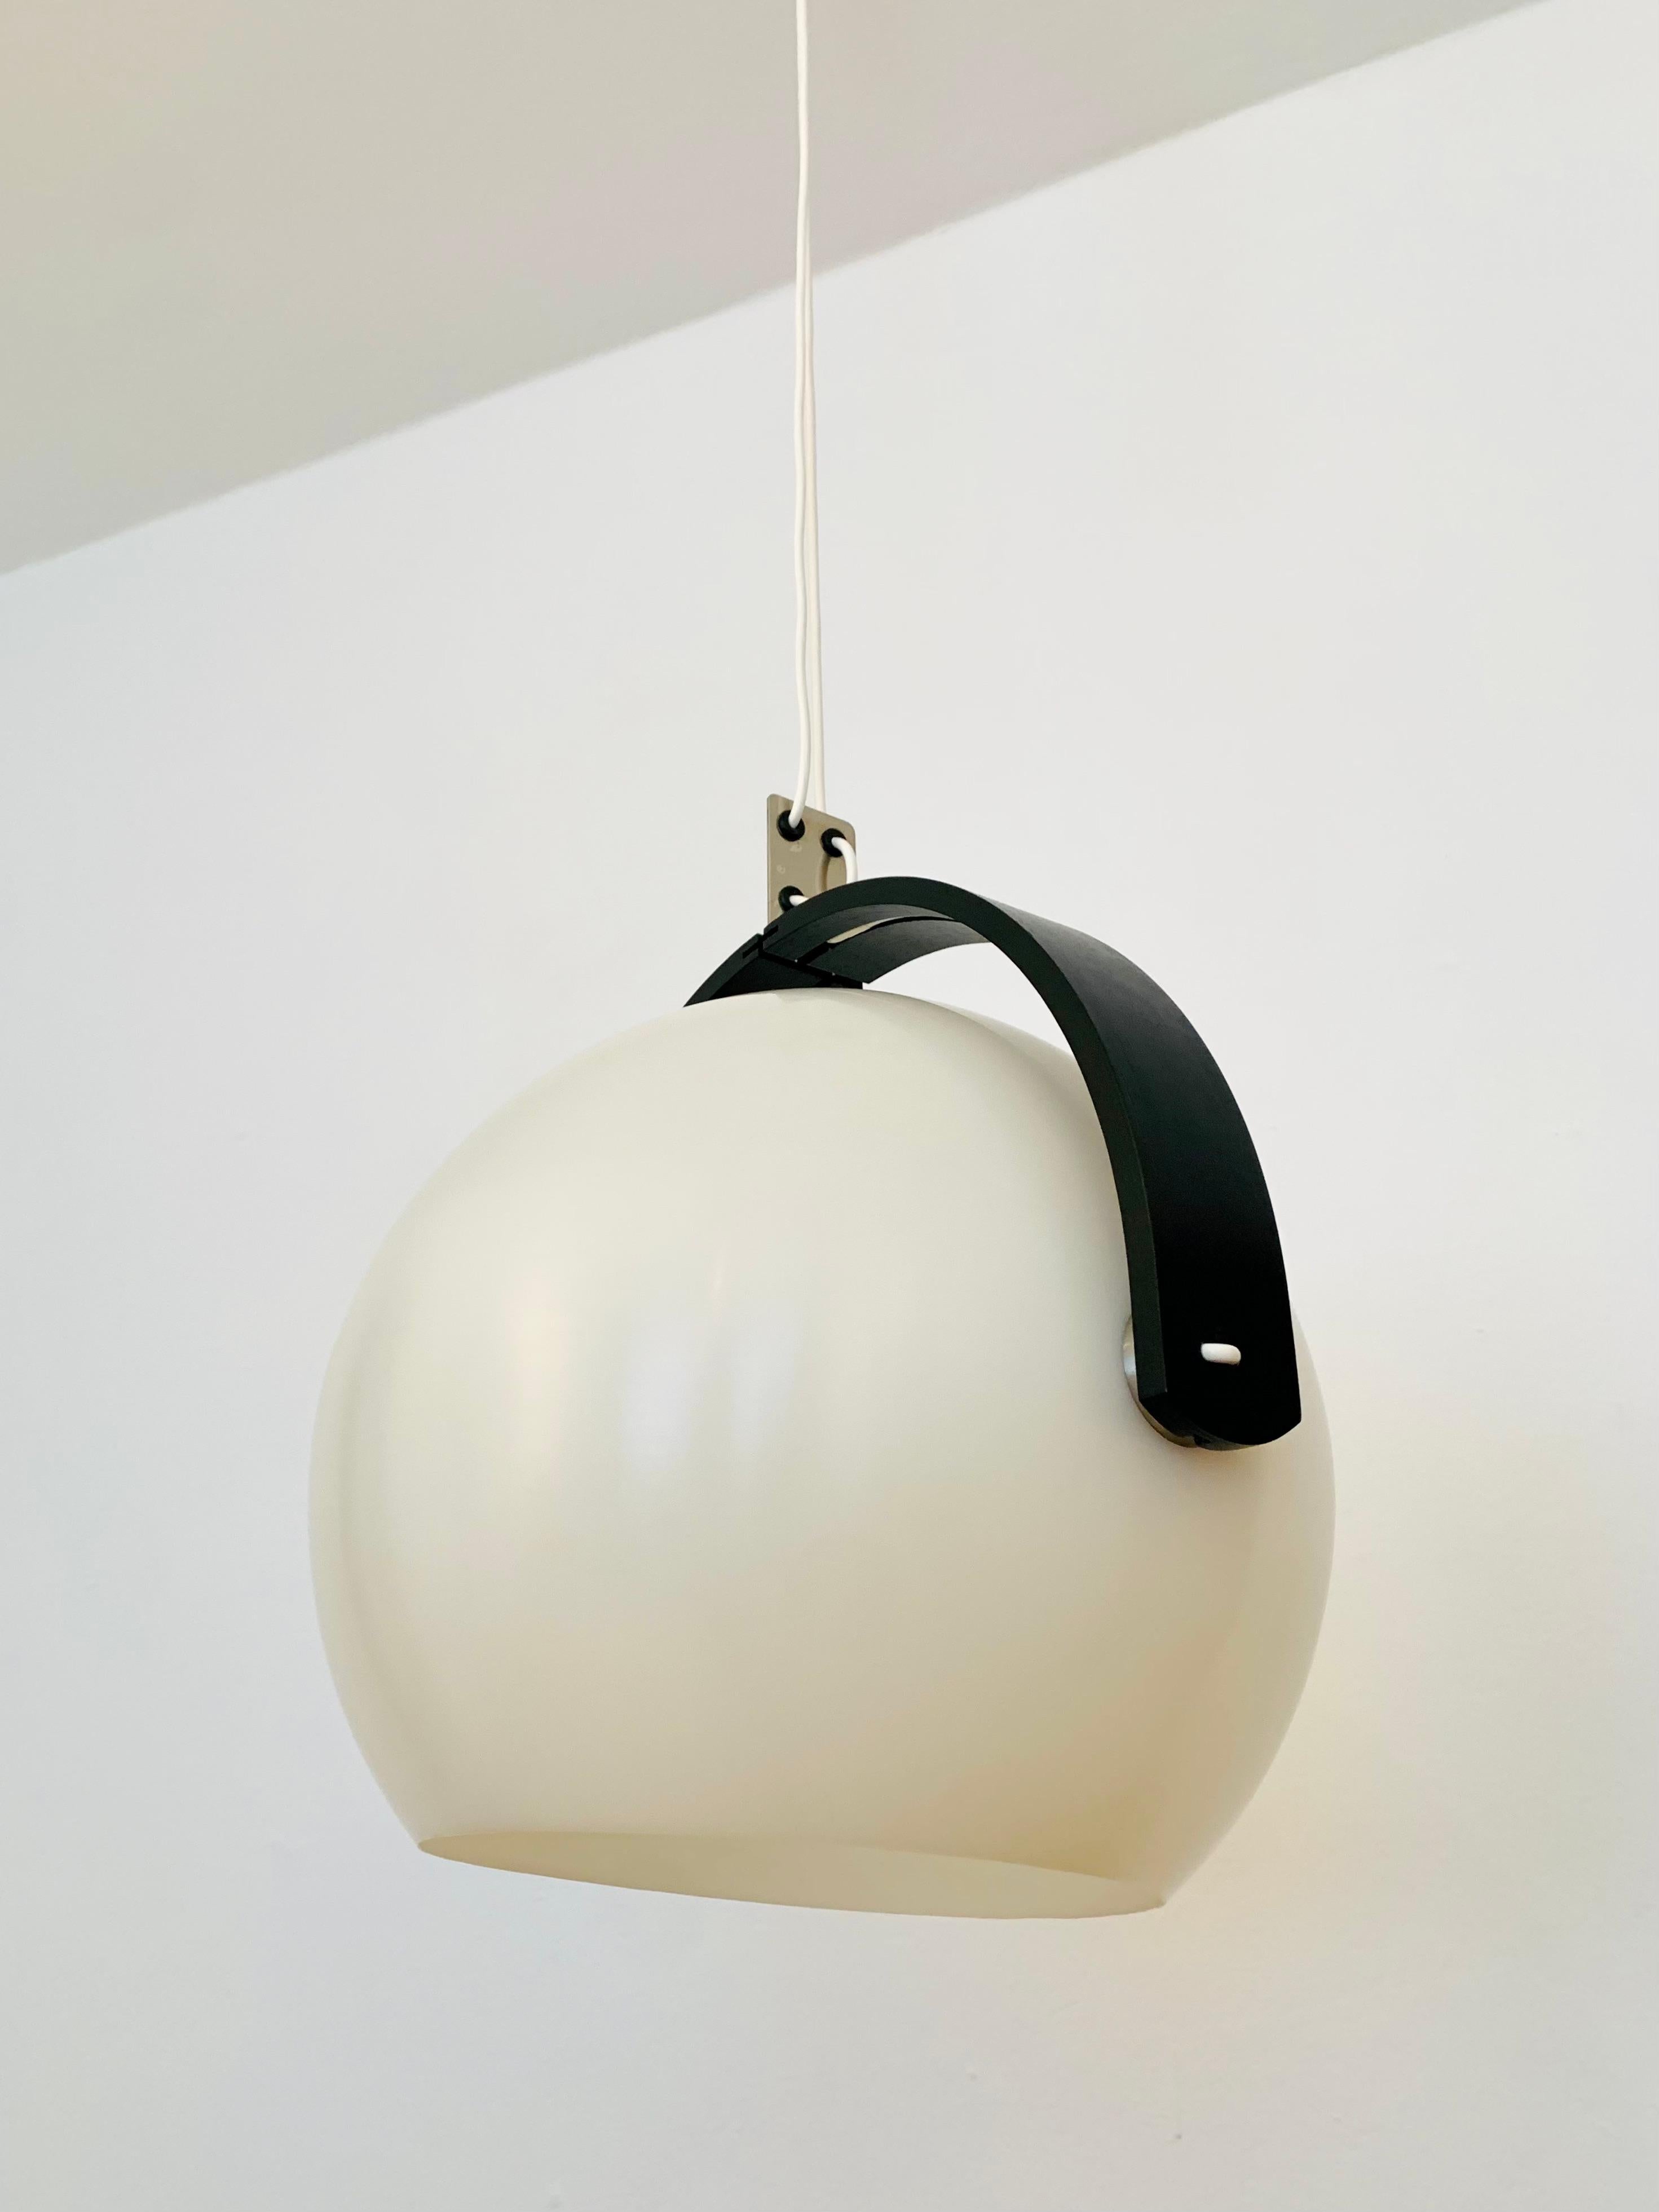 Adjustable Pendant Lamp by Temde In Good Condition For Sale In München, DE